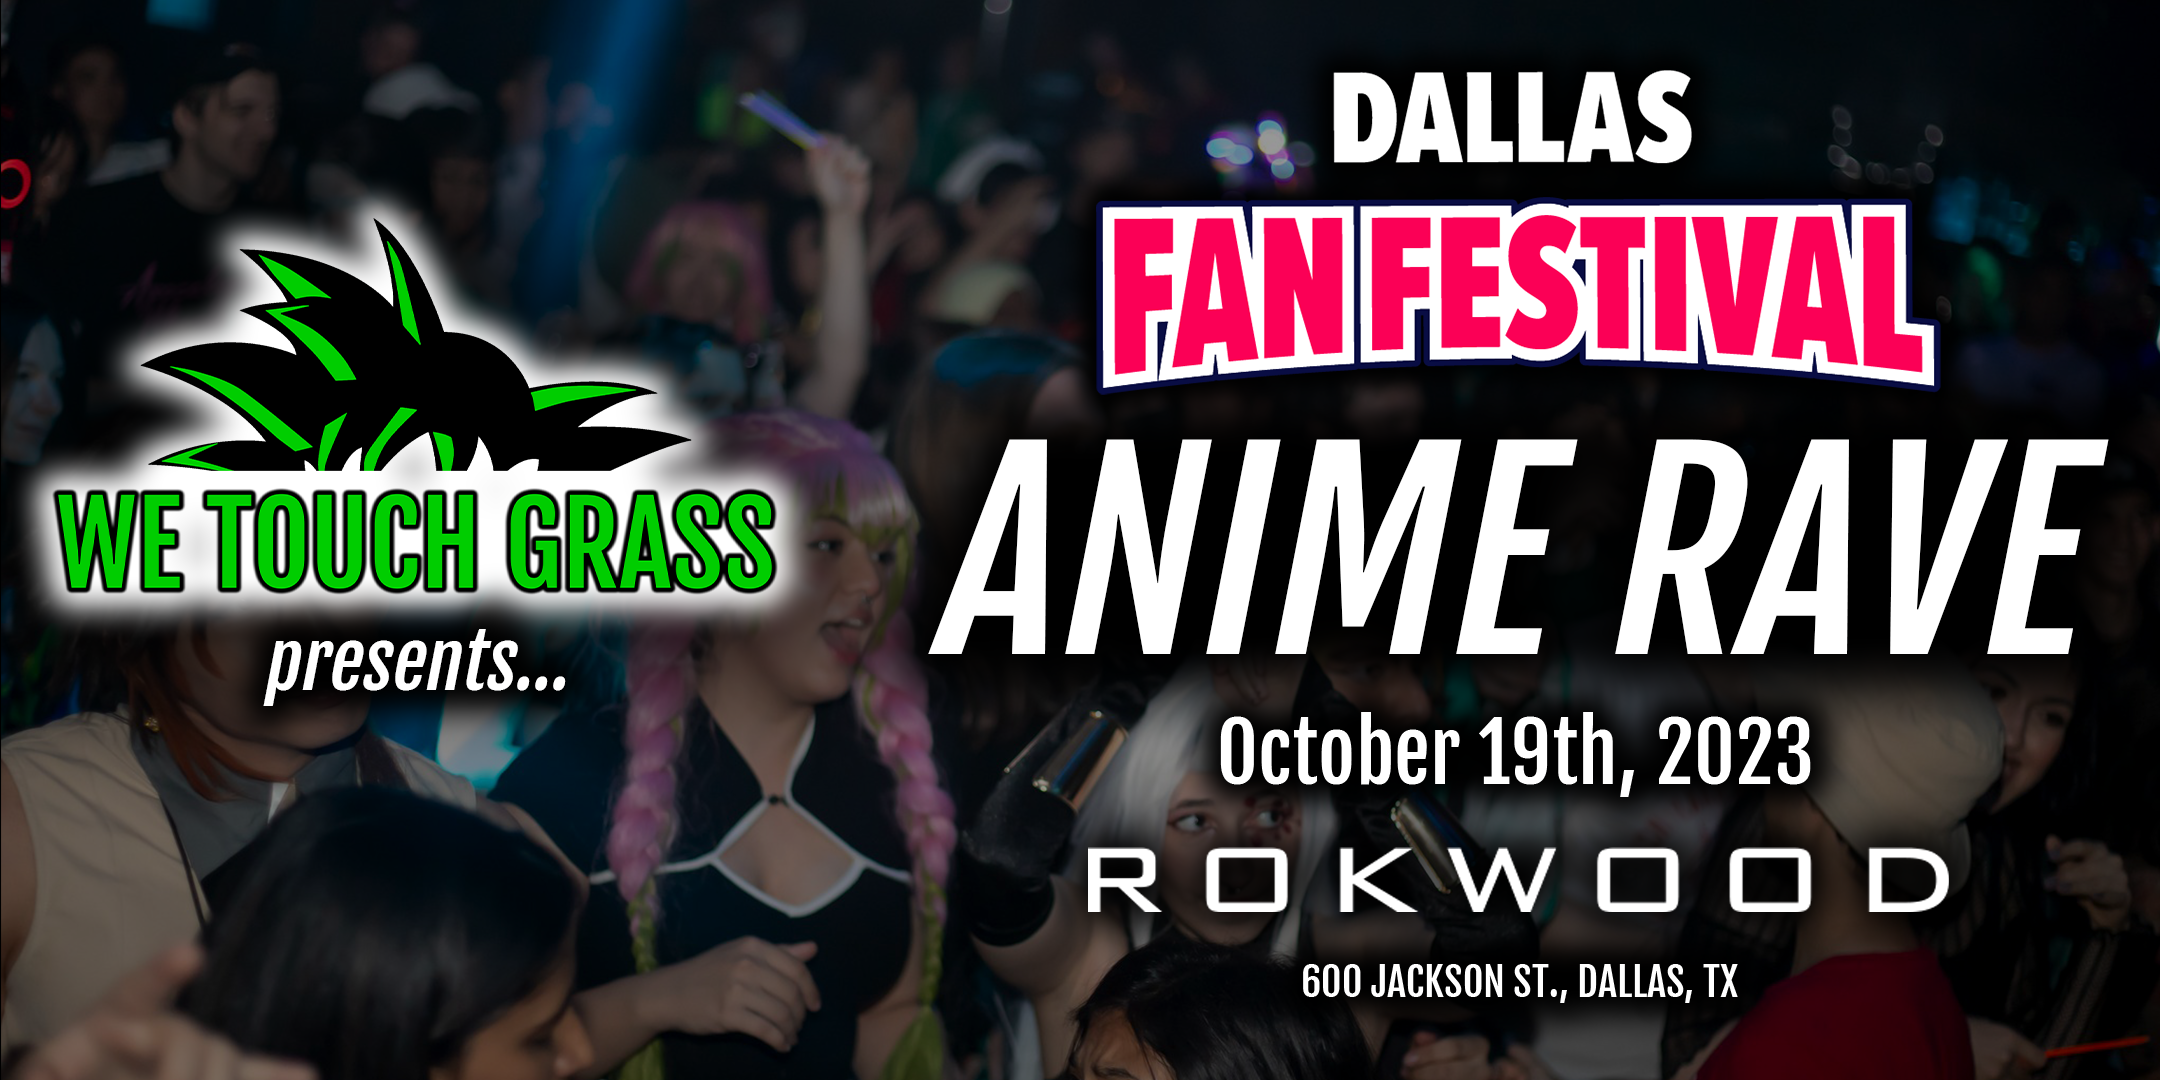 Japan-America Society of Dallas/Fort Worth Anime North Texas